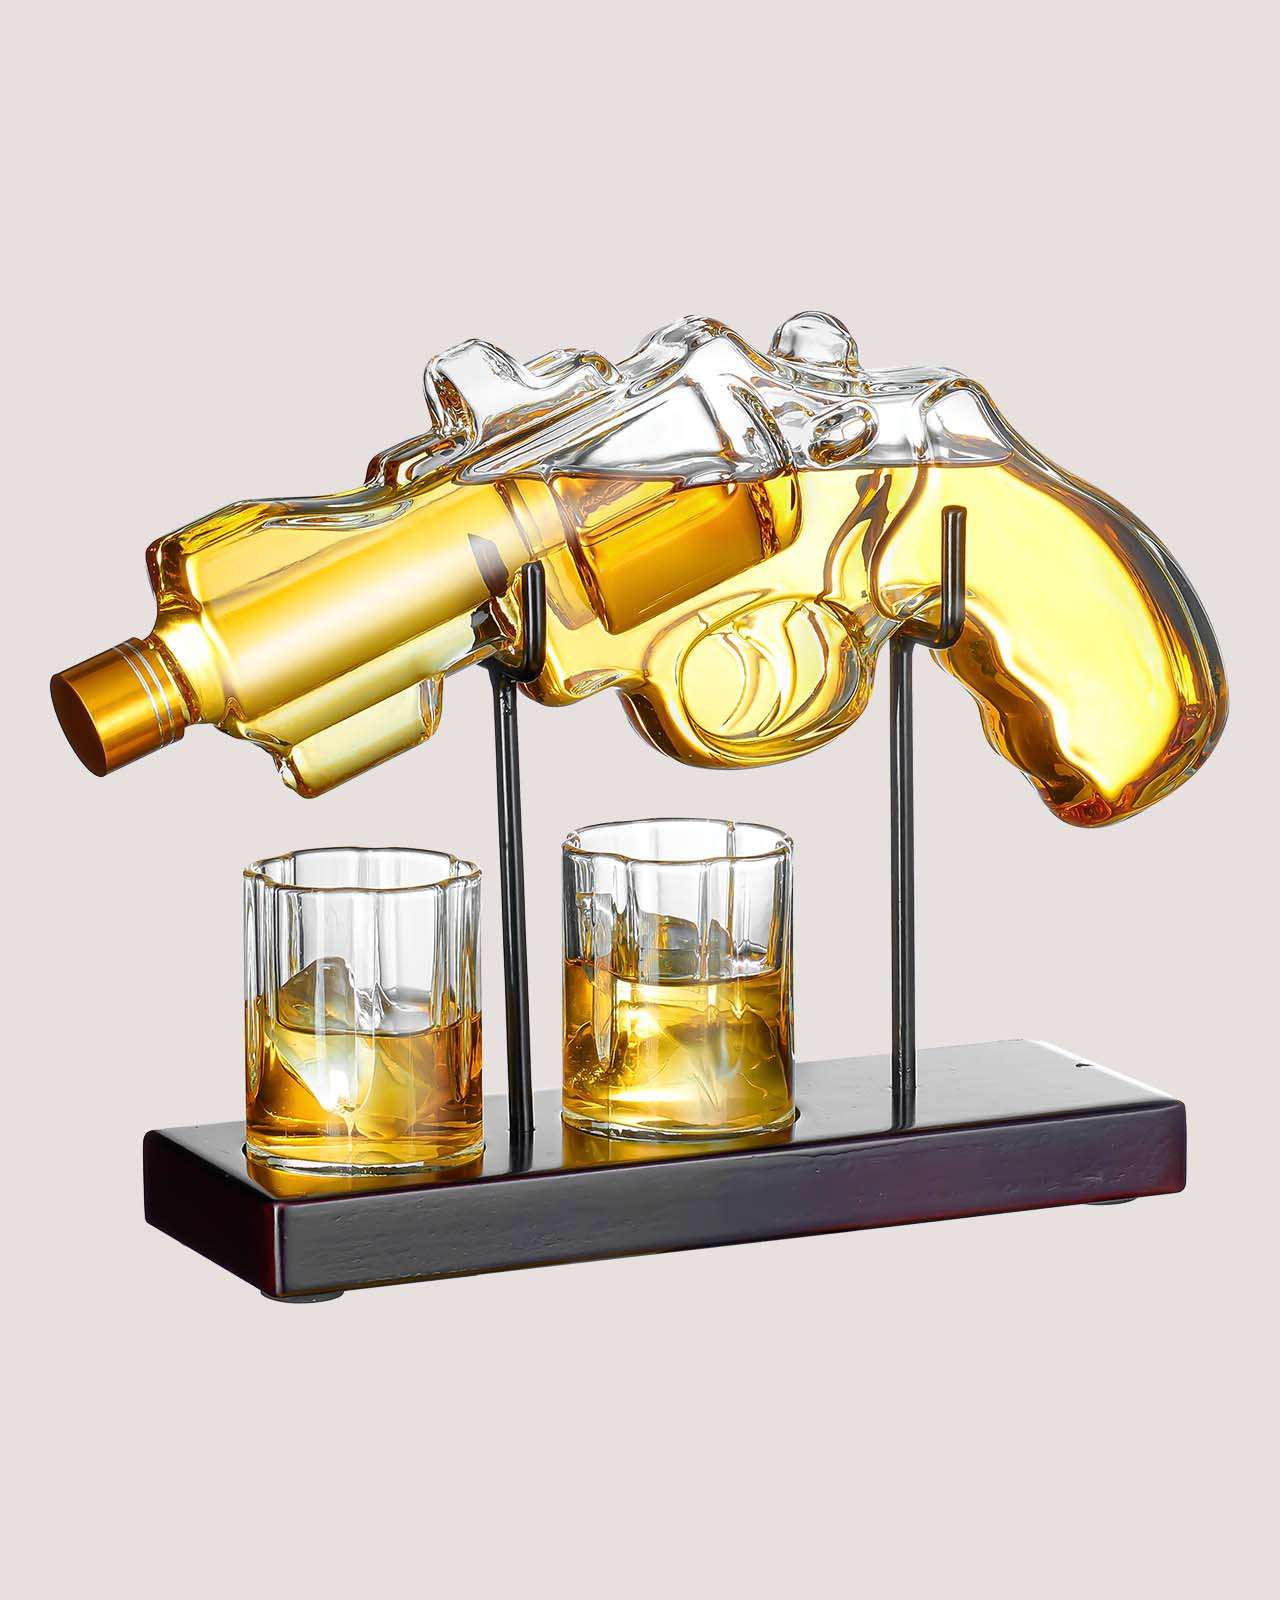 Kollea 9 Oz Gun Whiskey Decanter Set, Whiskey Gifts for Men